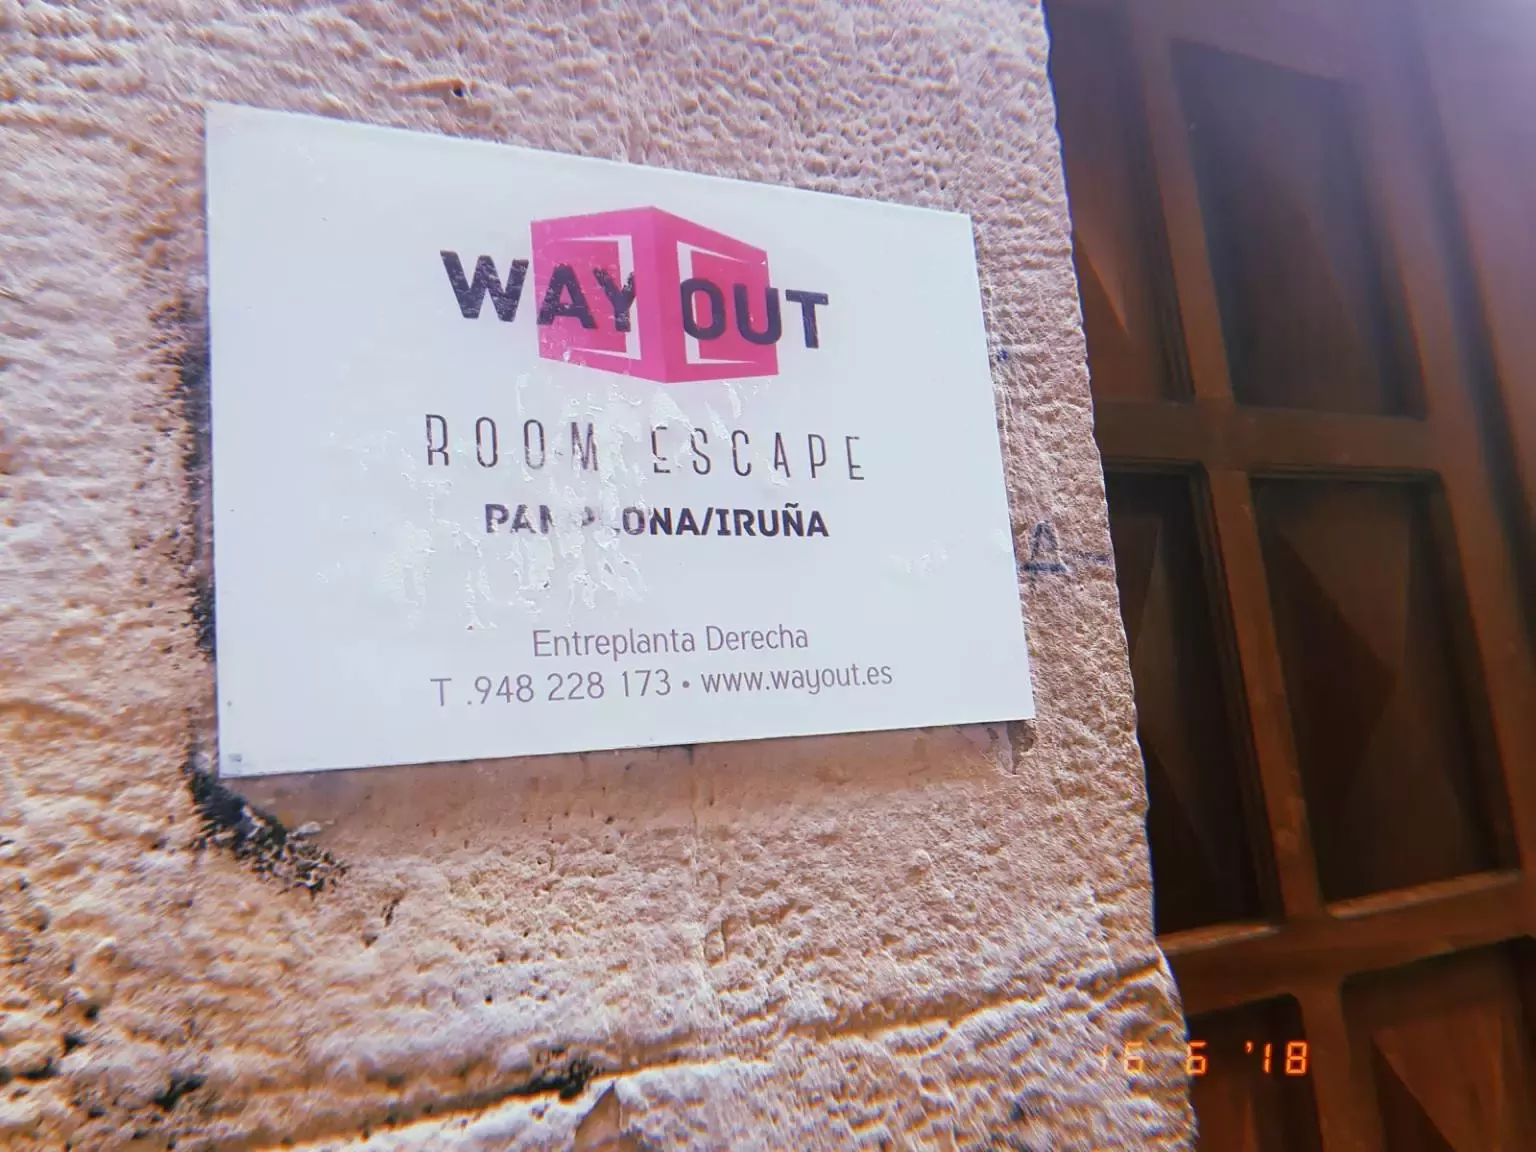 2. Wayout Room Escape Pamplona